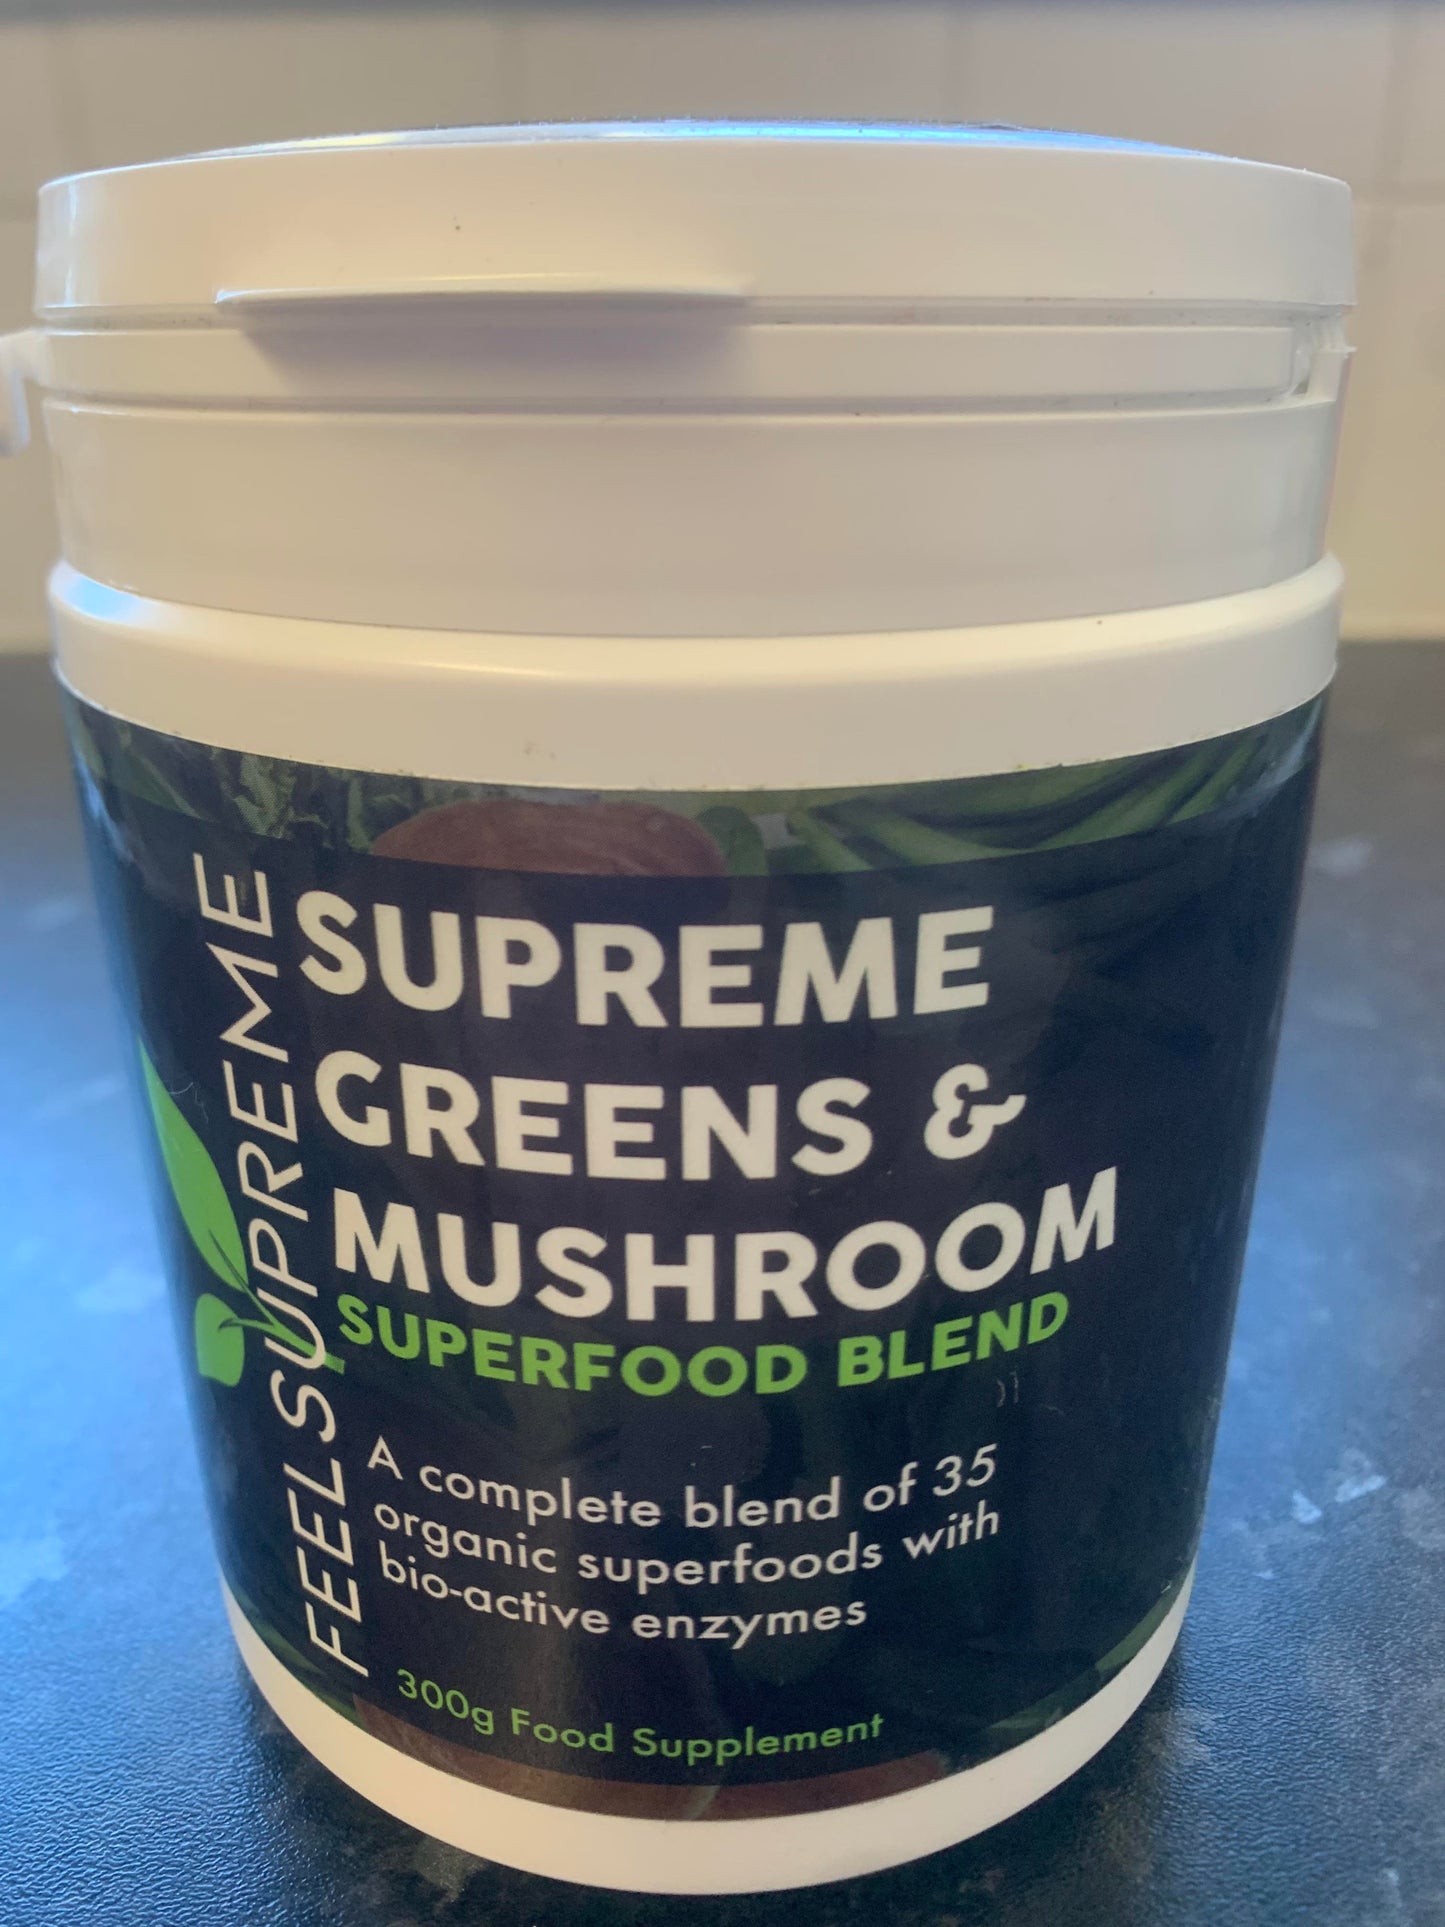 Supreme Greens & Mushroom Superfood Blend Organic